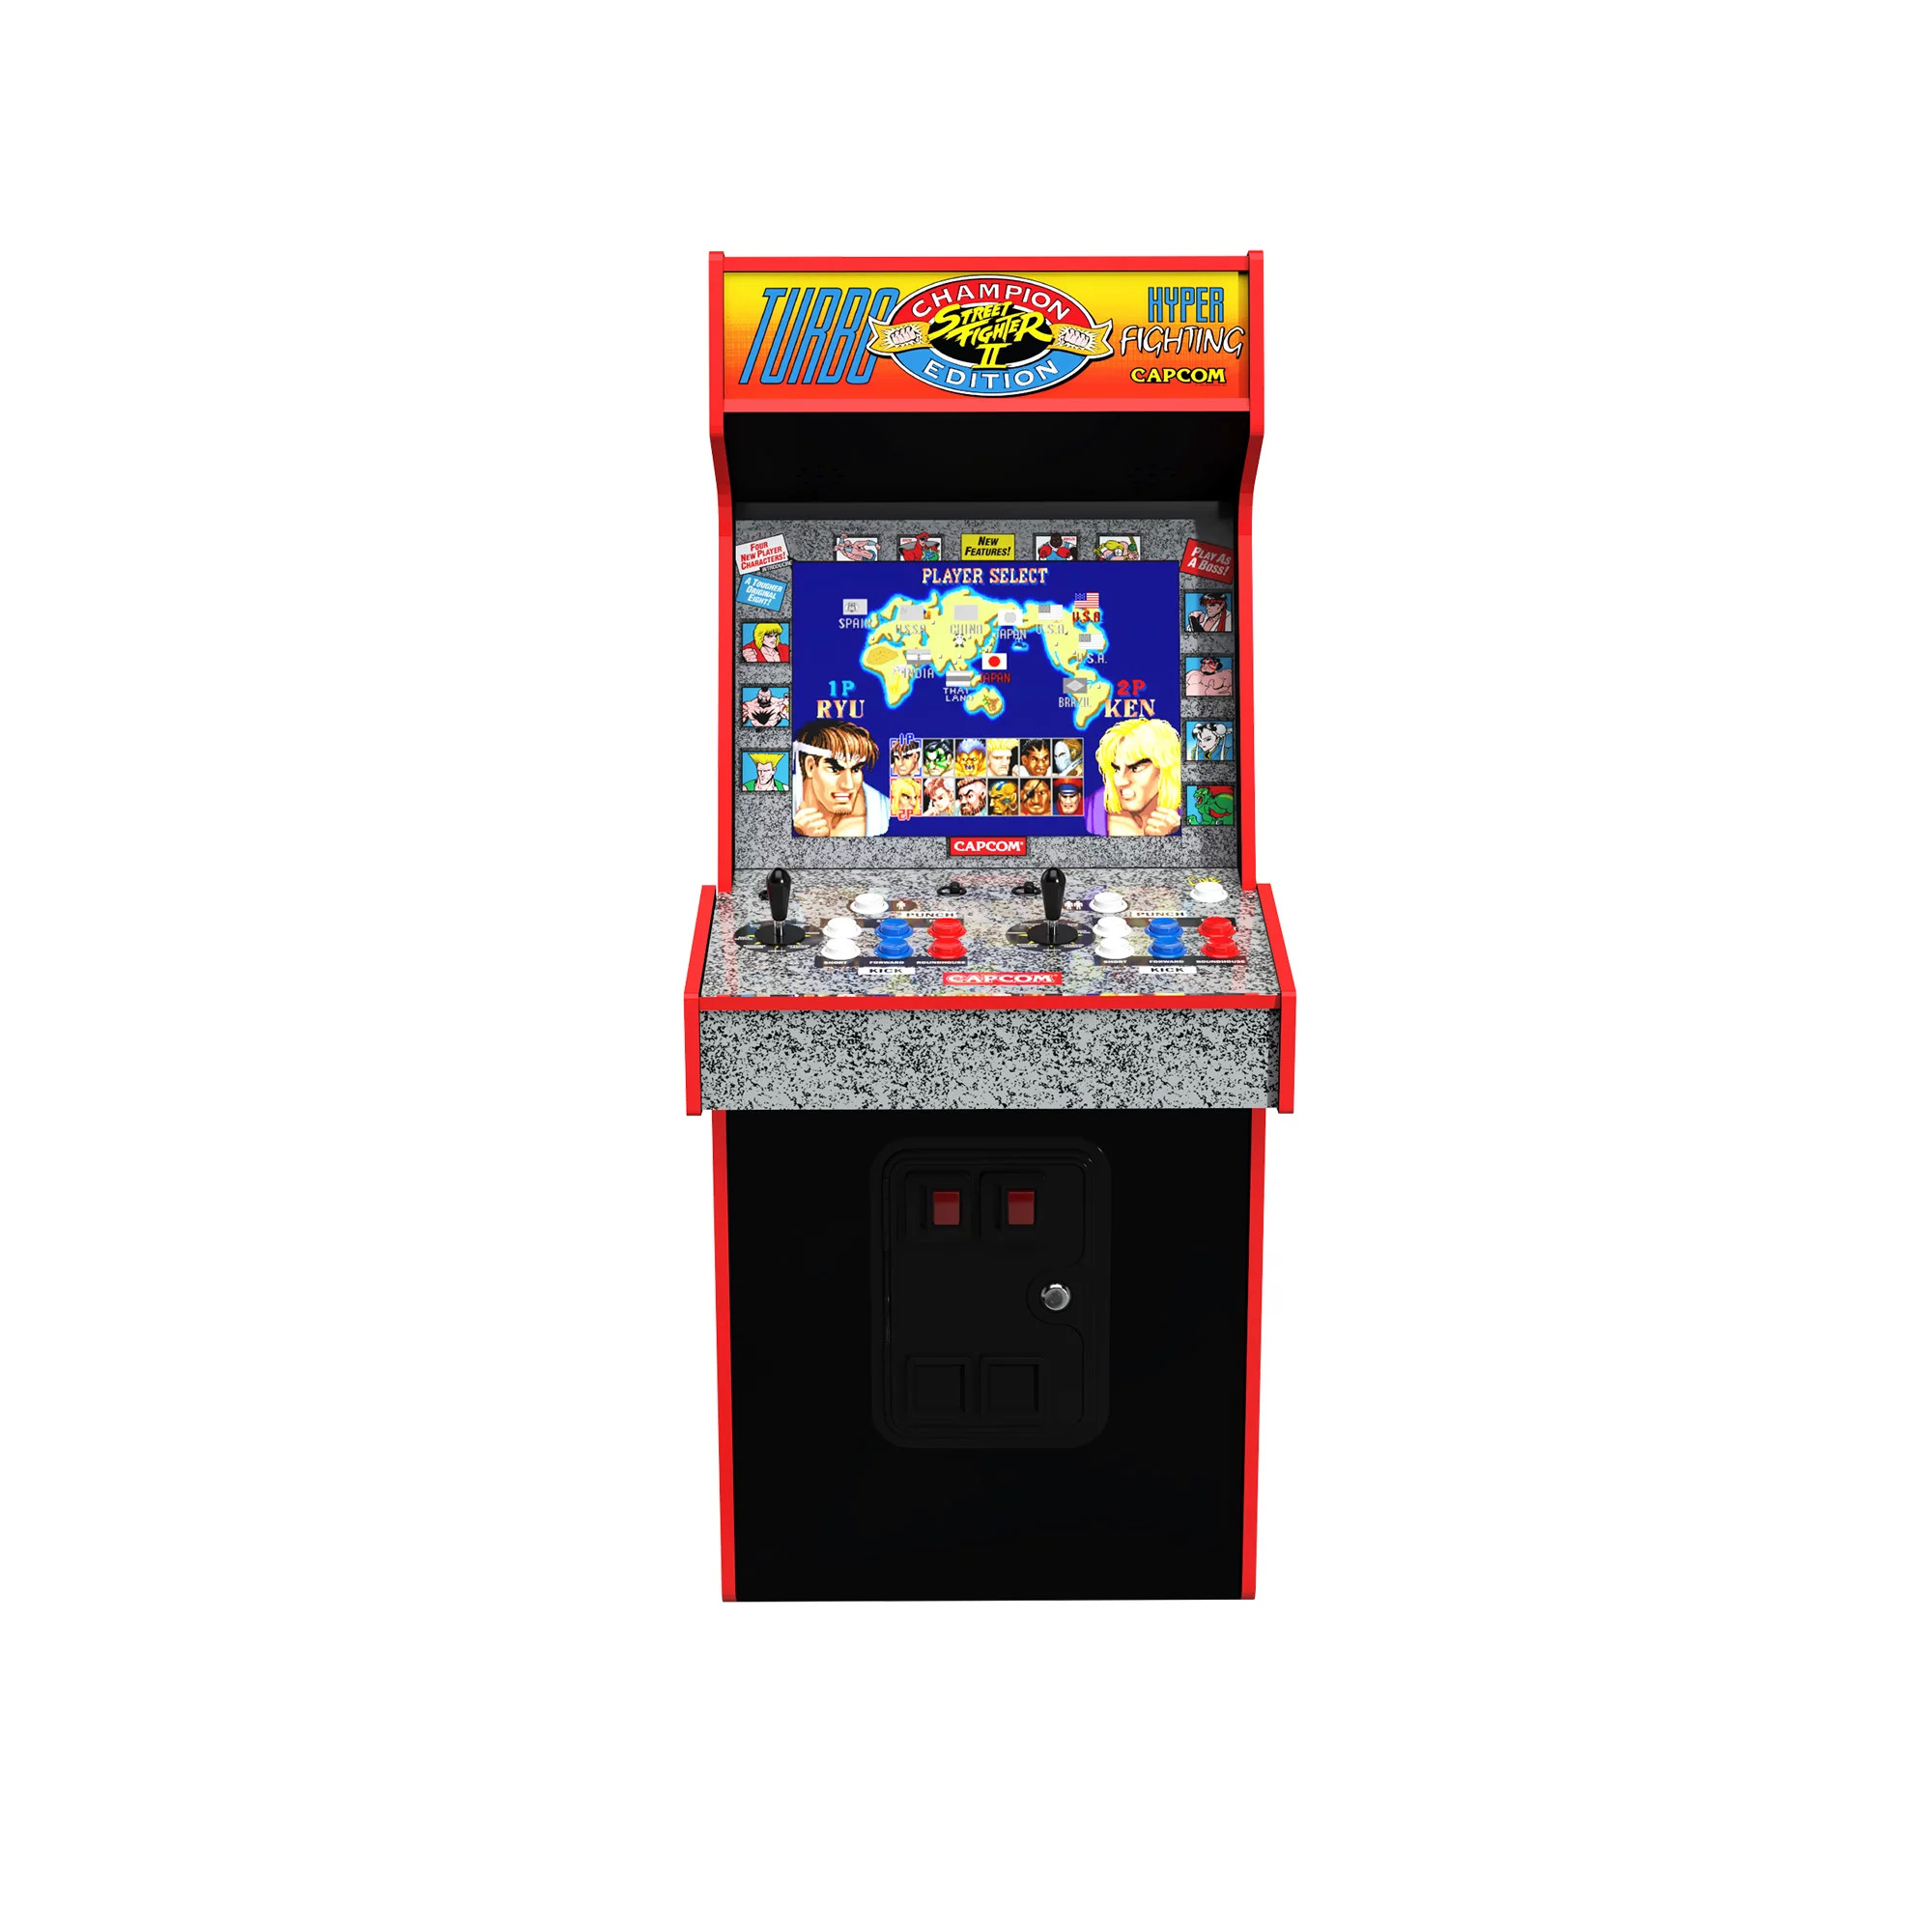 Arcade1Up Capcom Legacy Arcade Game Yoga Flame Edition $299 & More + Free Shipping